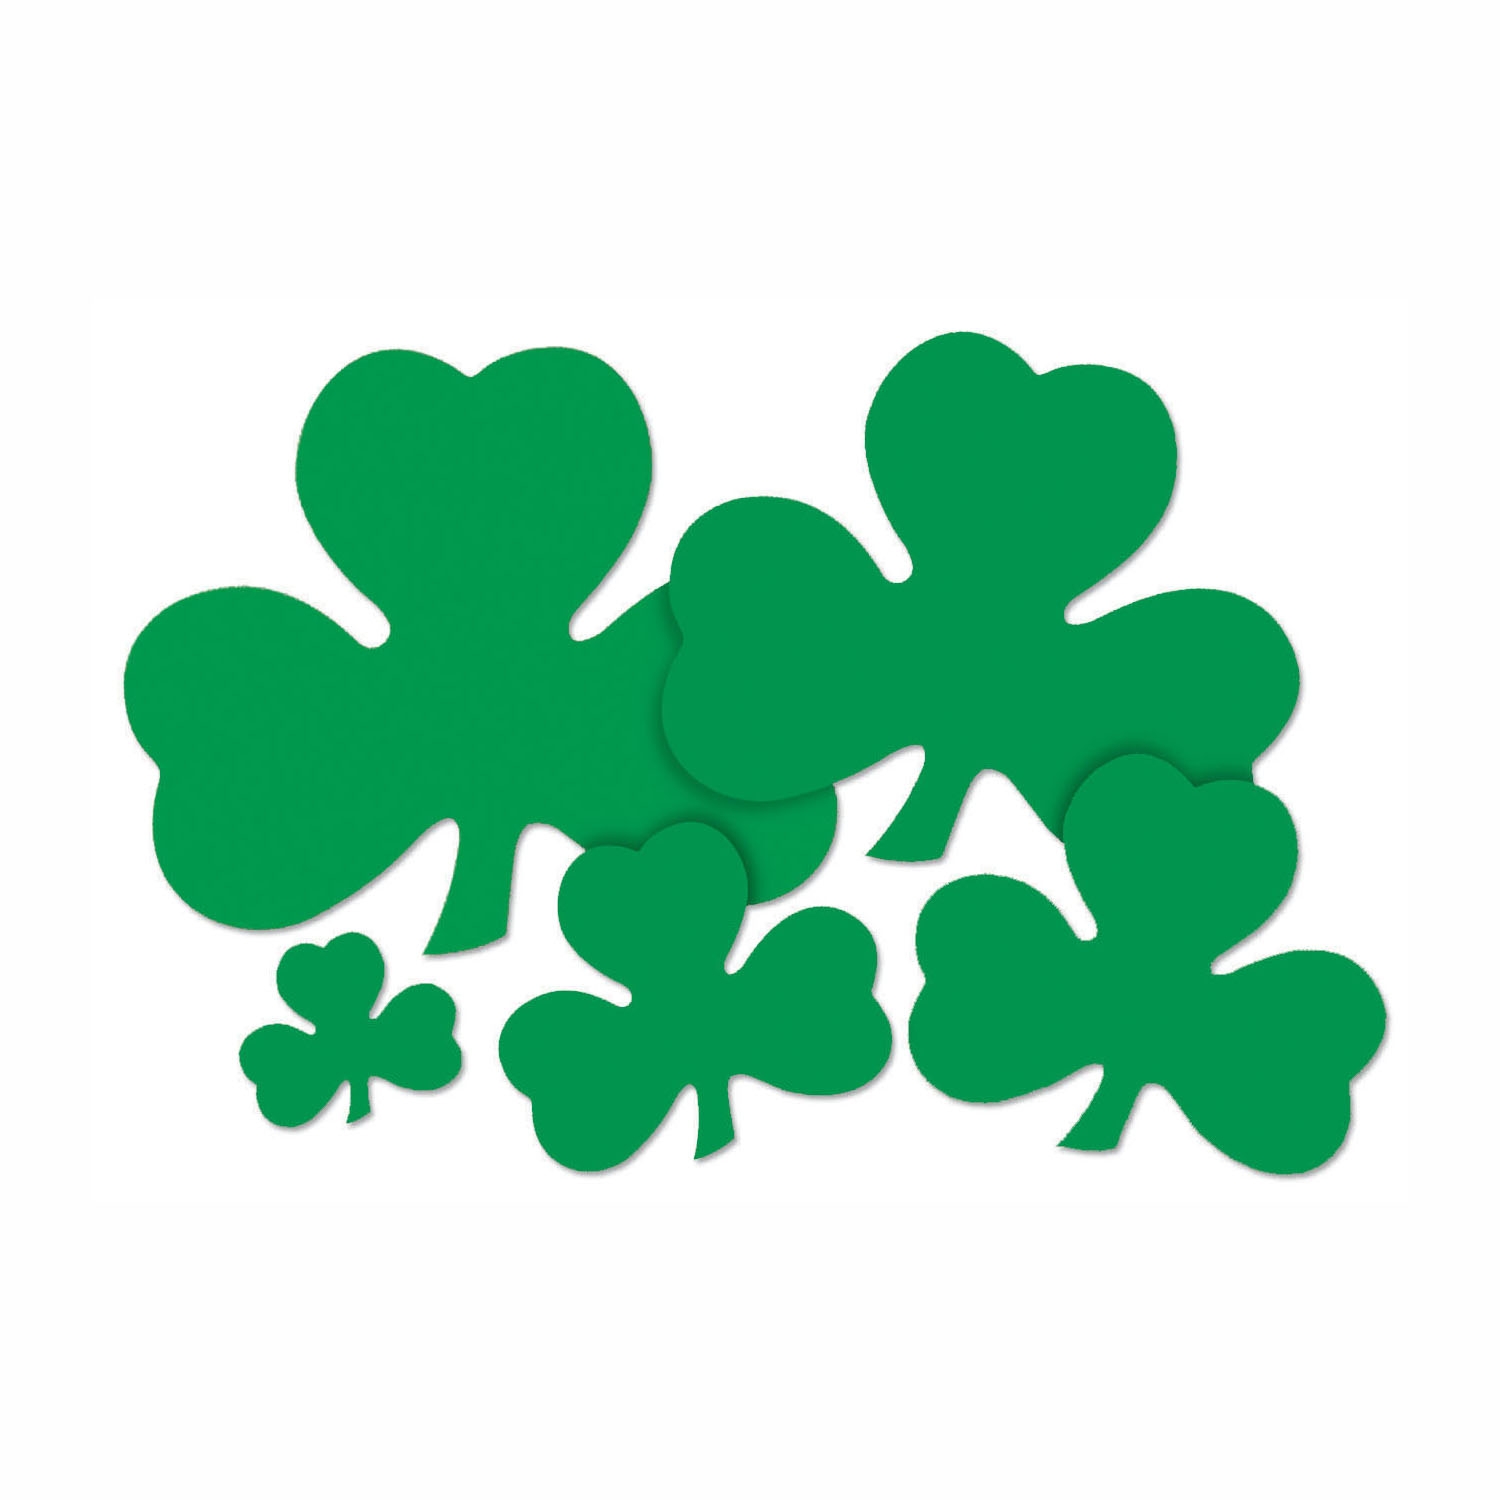 Ireland - St Patrick's Day